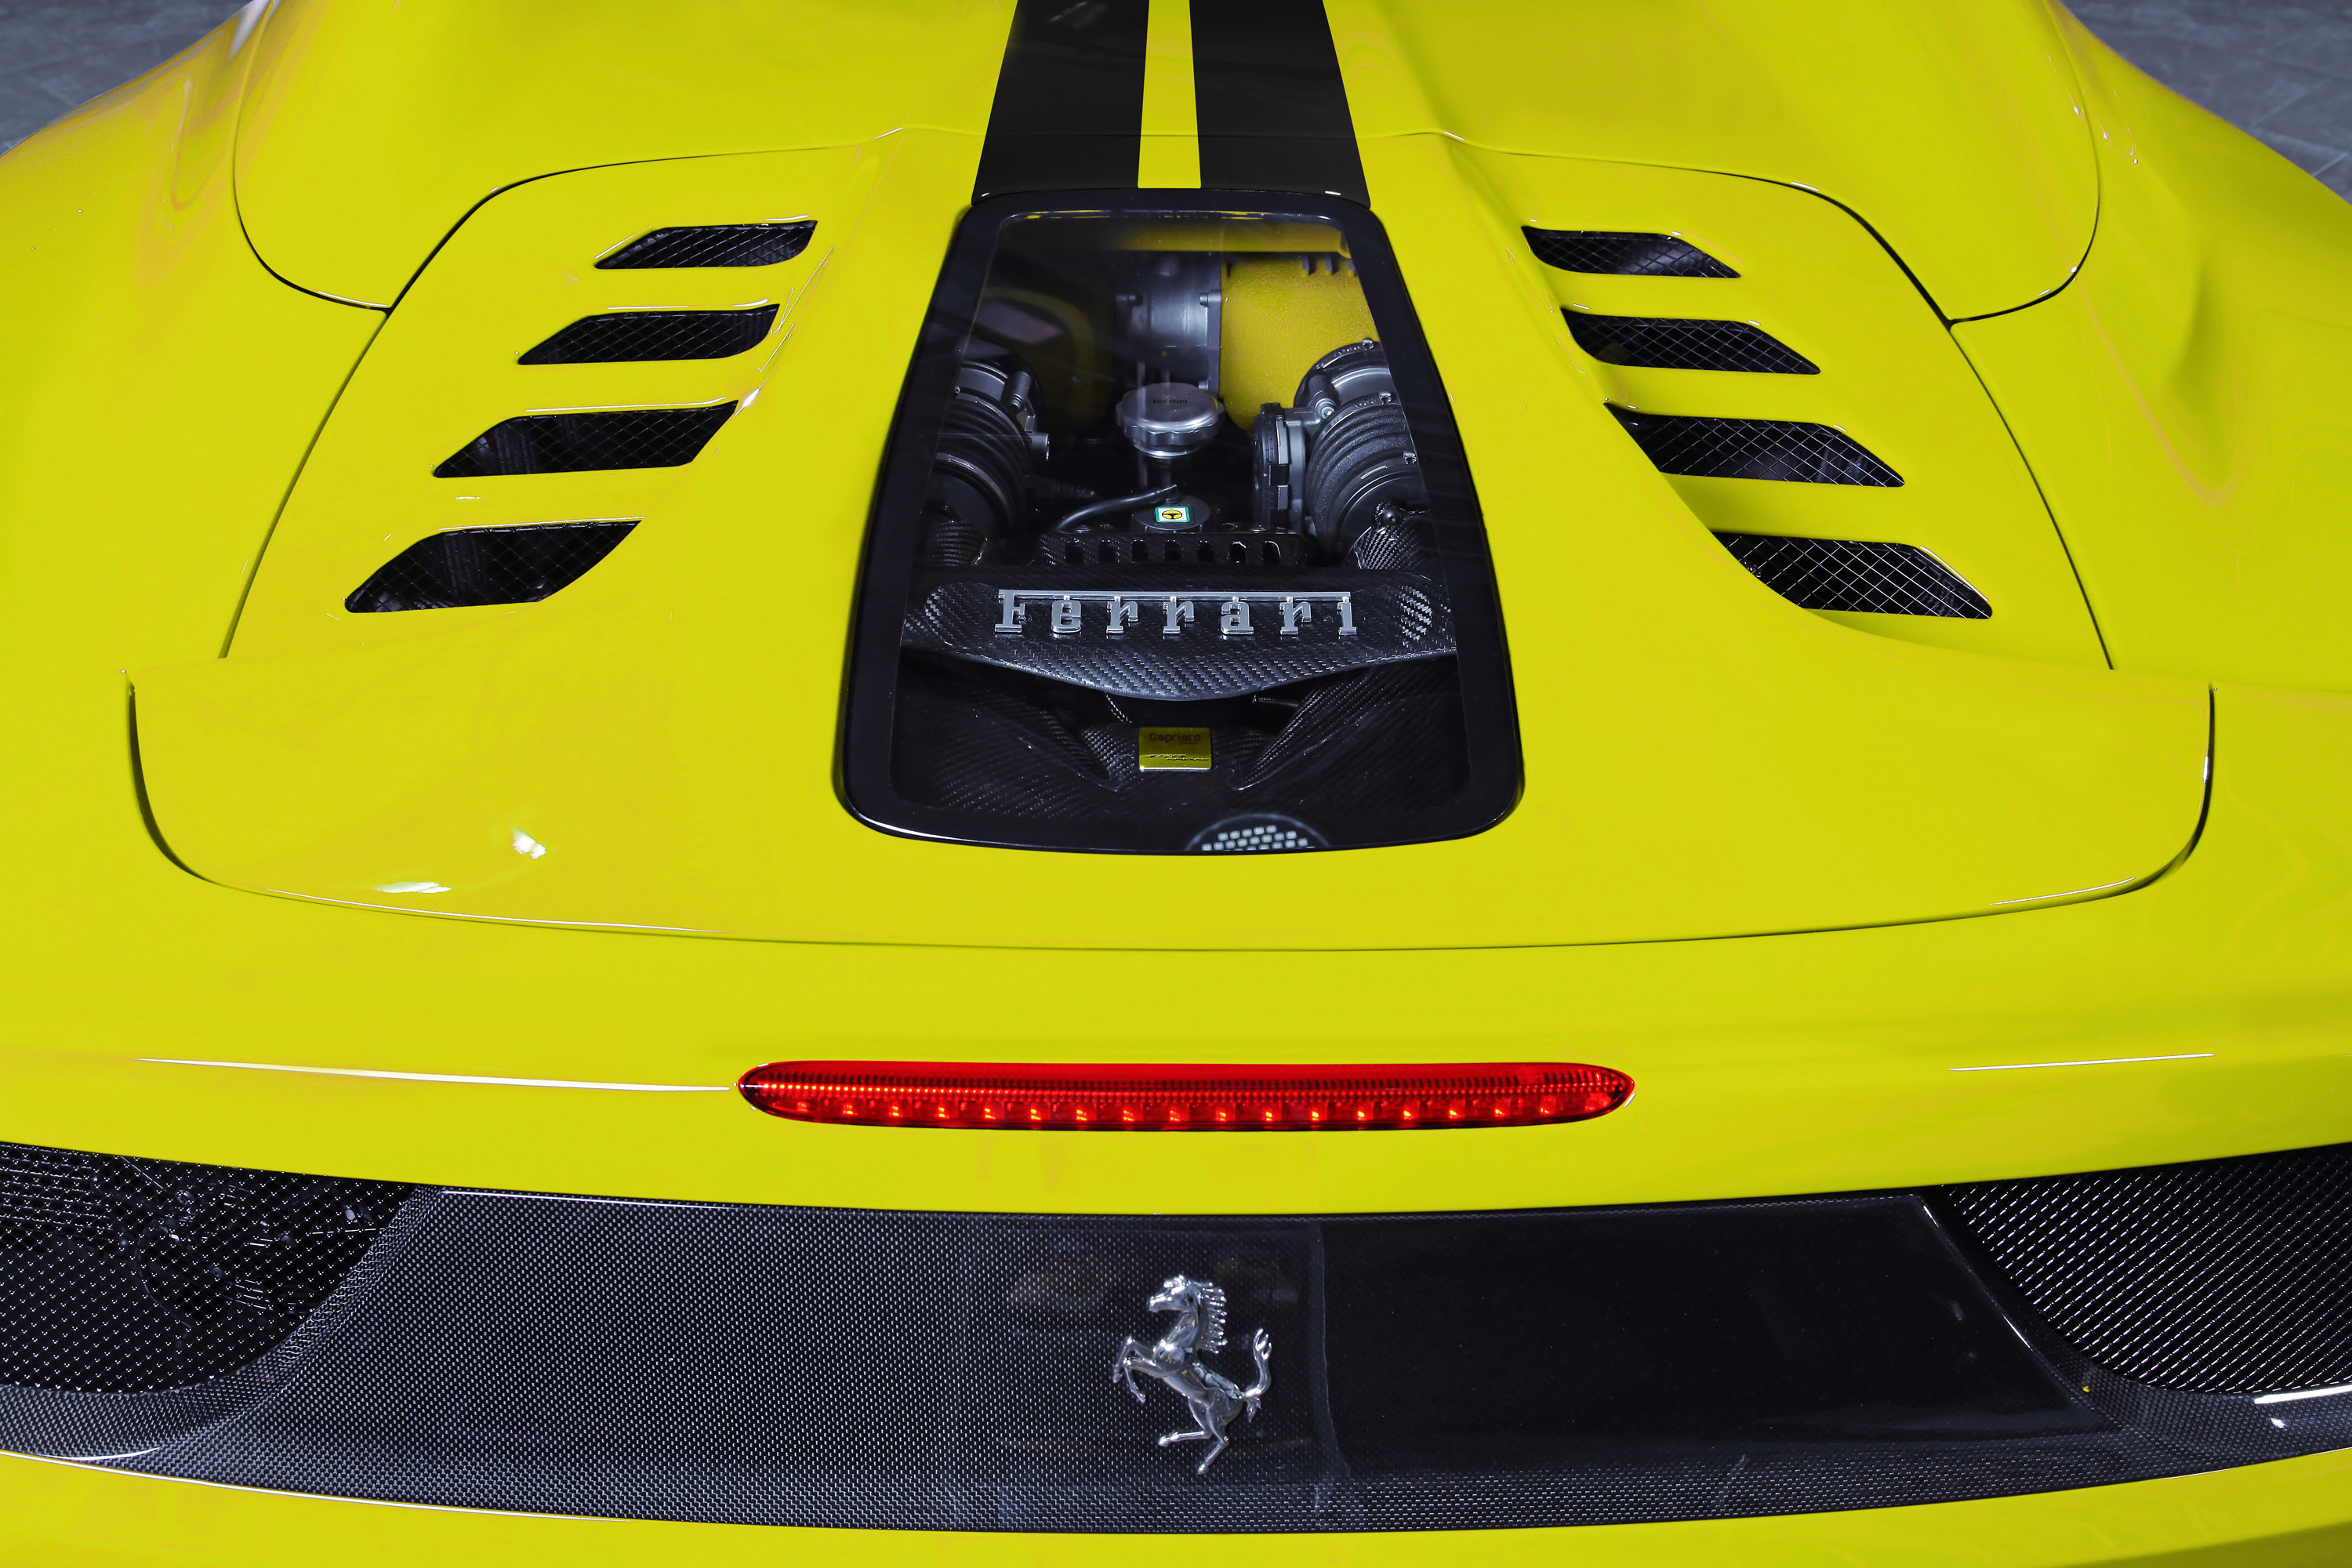 2014 Capristo Ferrari 458 Spider